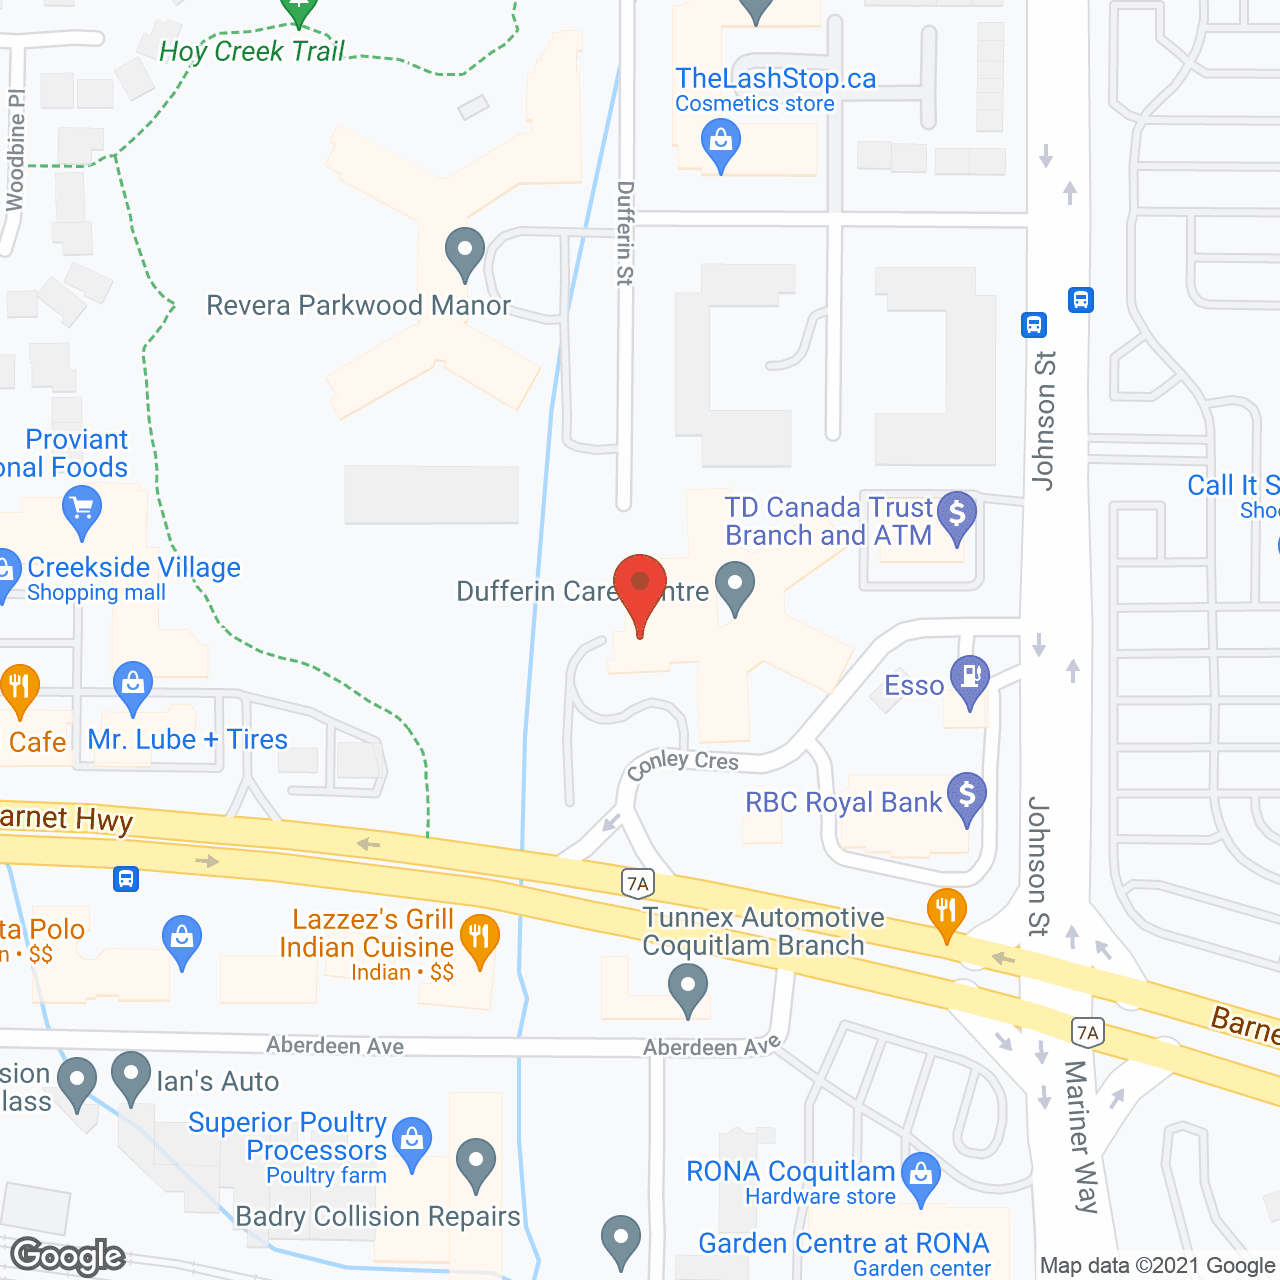 Dufferin Care Center in google map